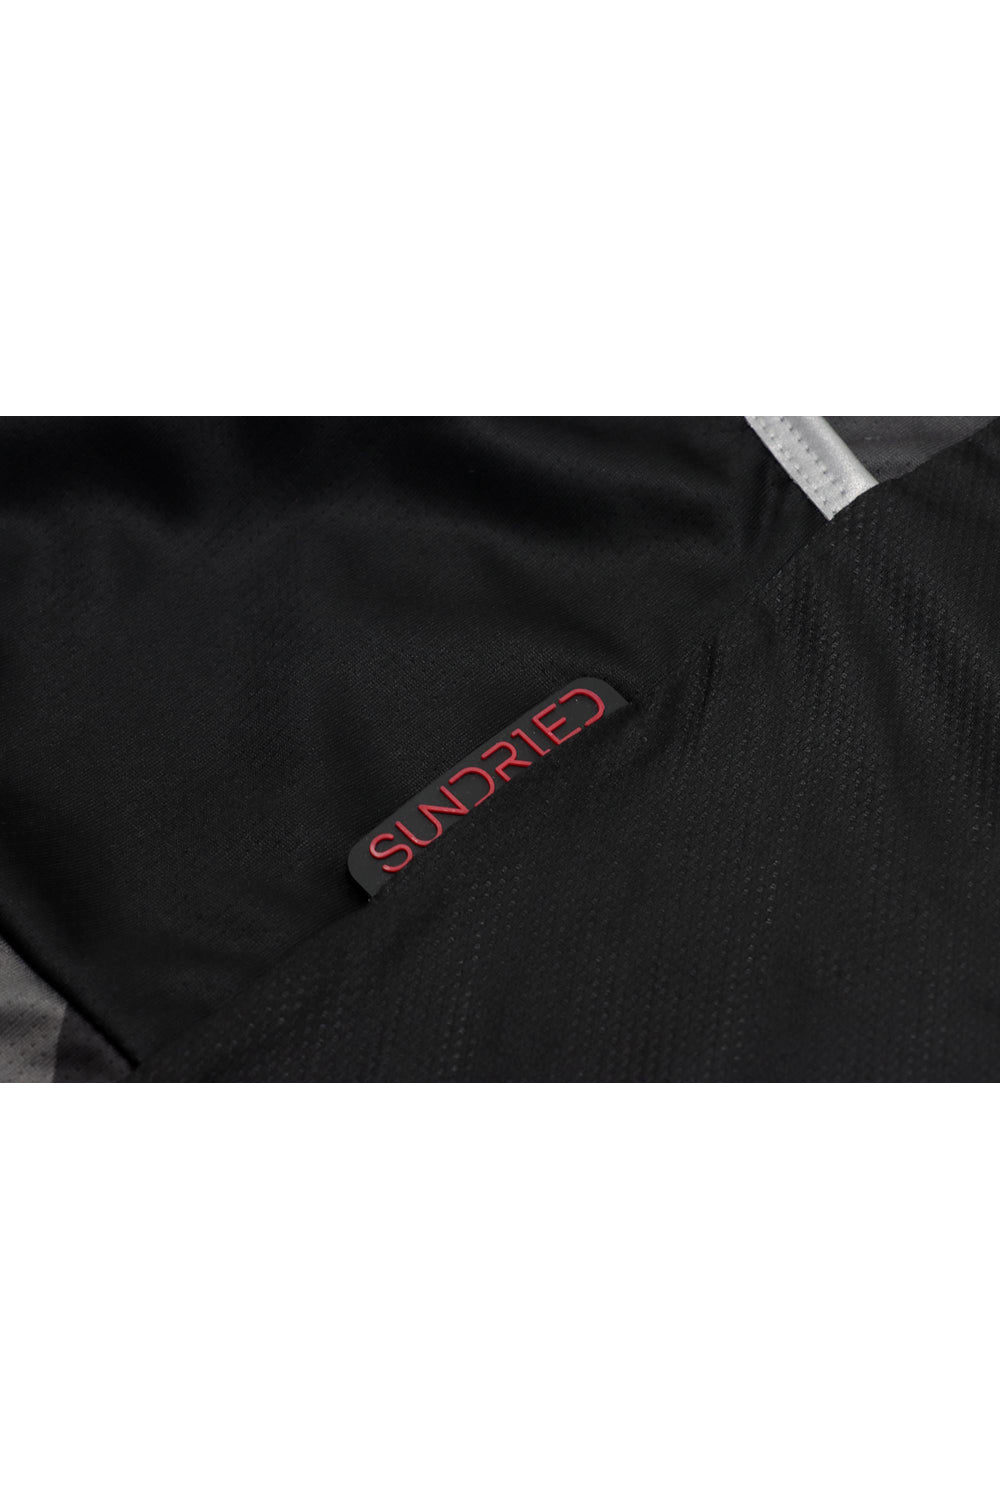 Sundried Geometric Men's Short Sleeve Training Jersey Short Sleeve Jersey Activewear